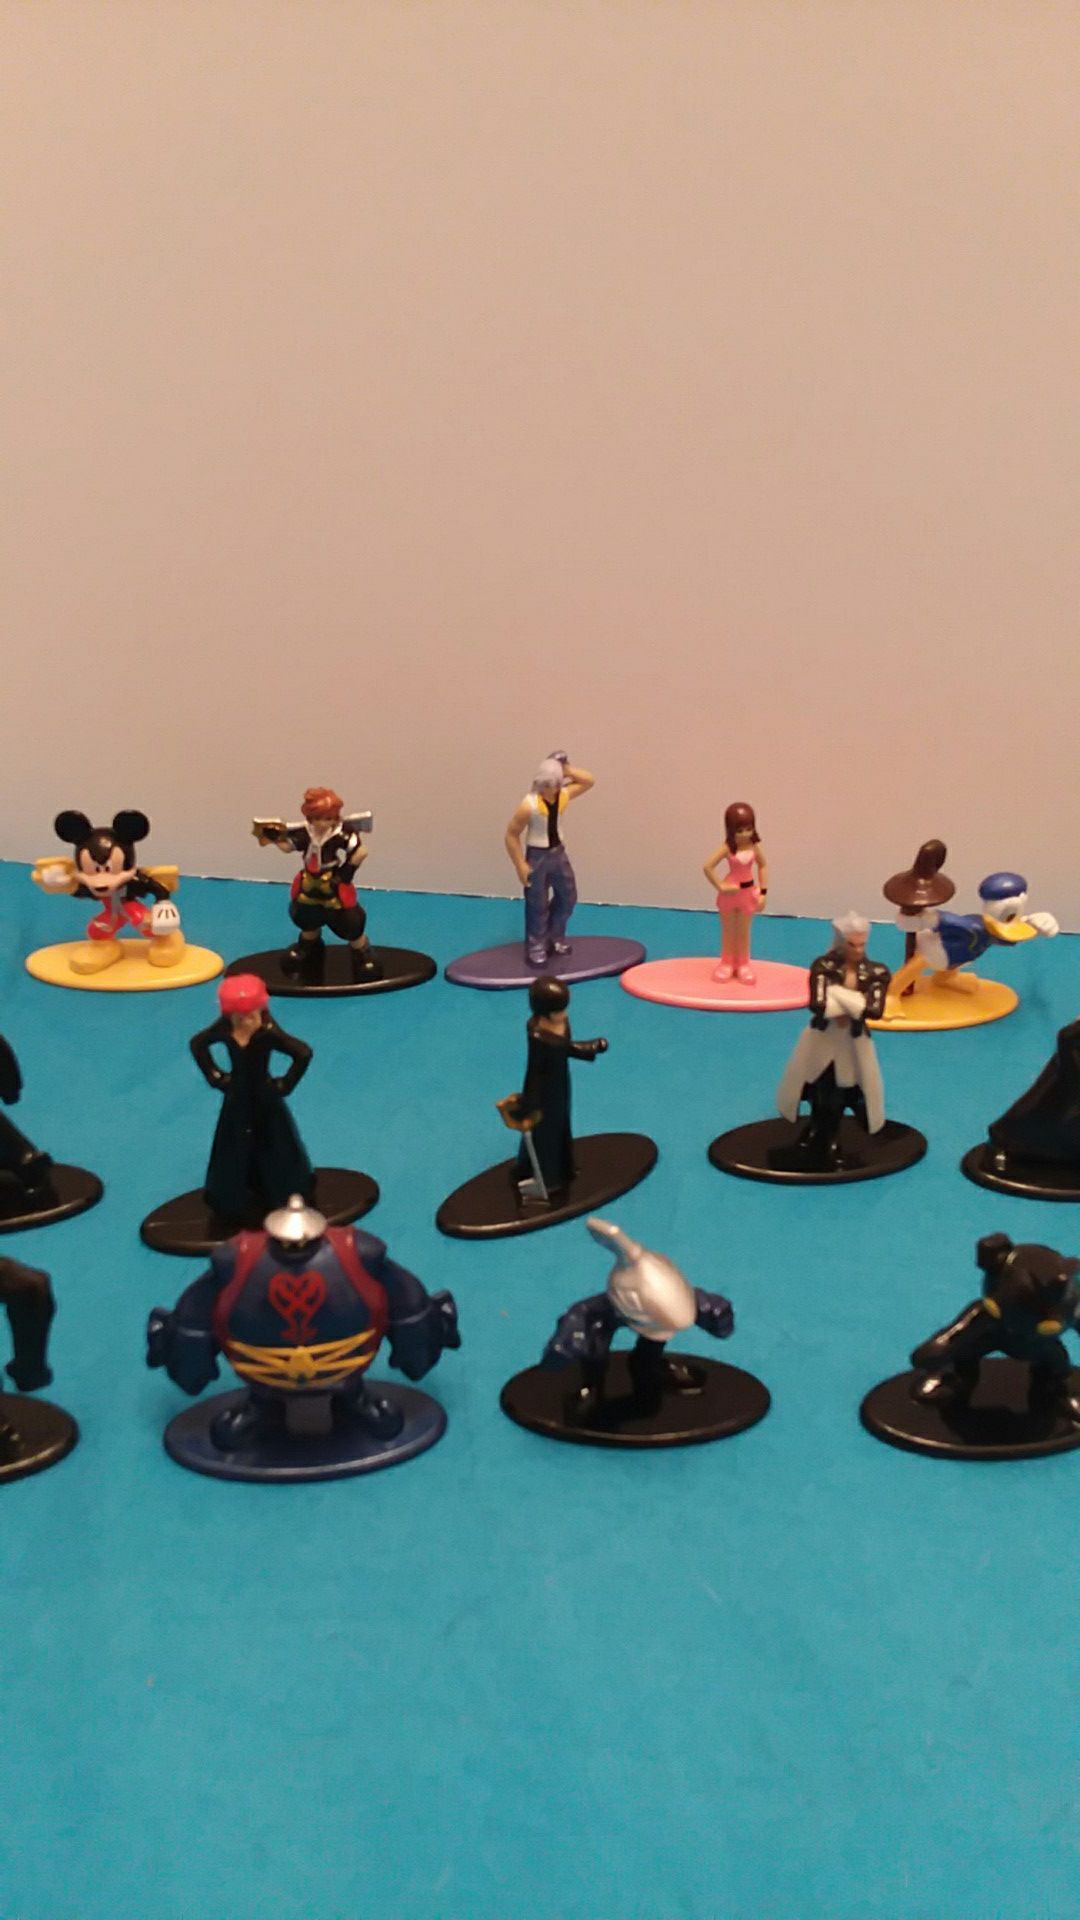 Kingdom Hearts figures